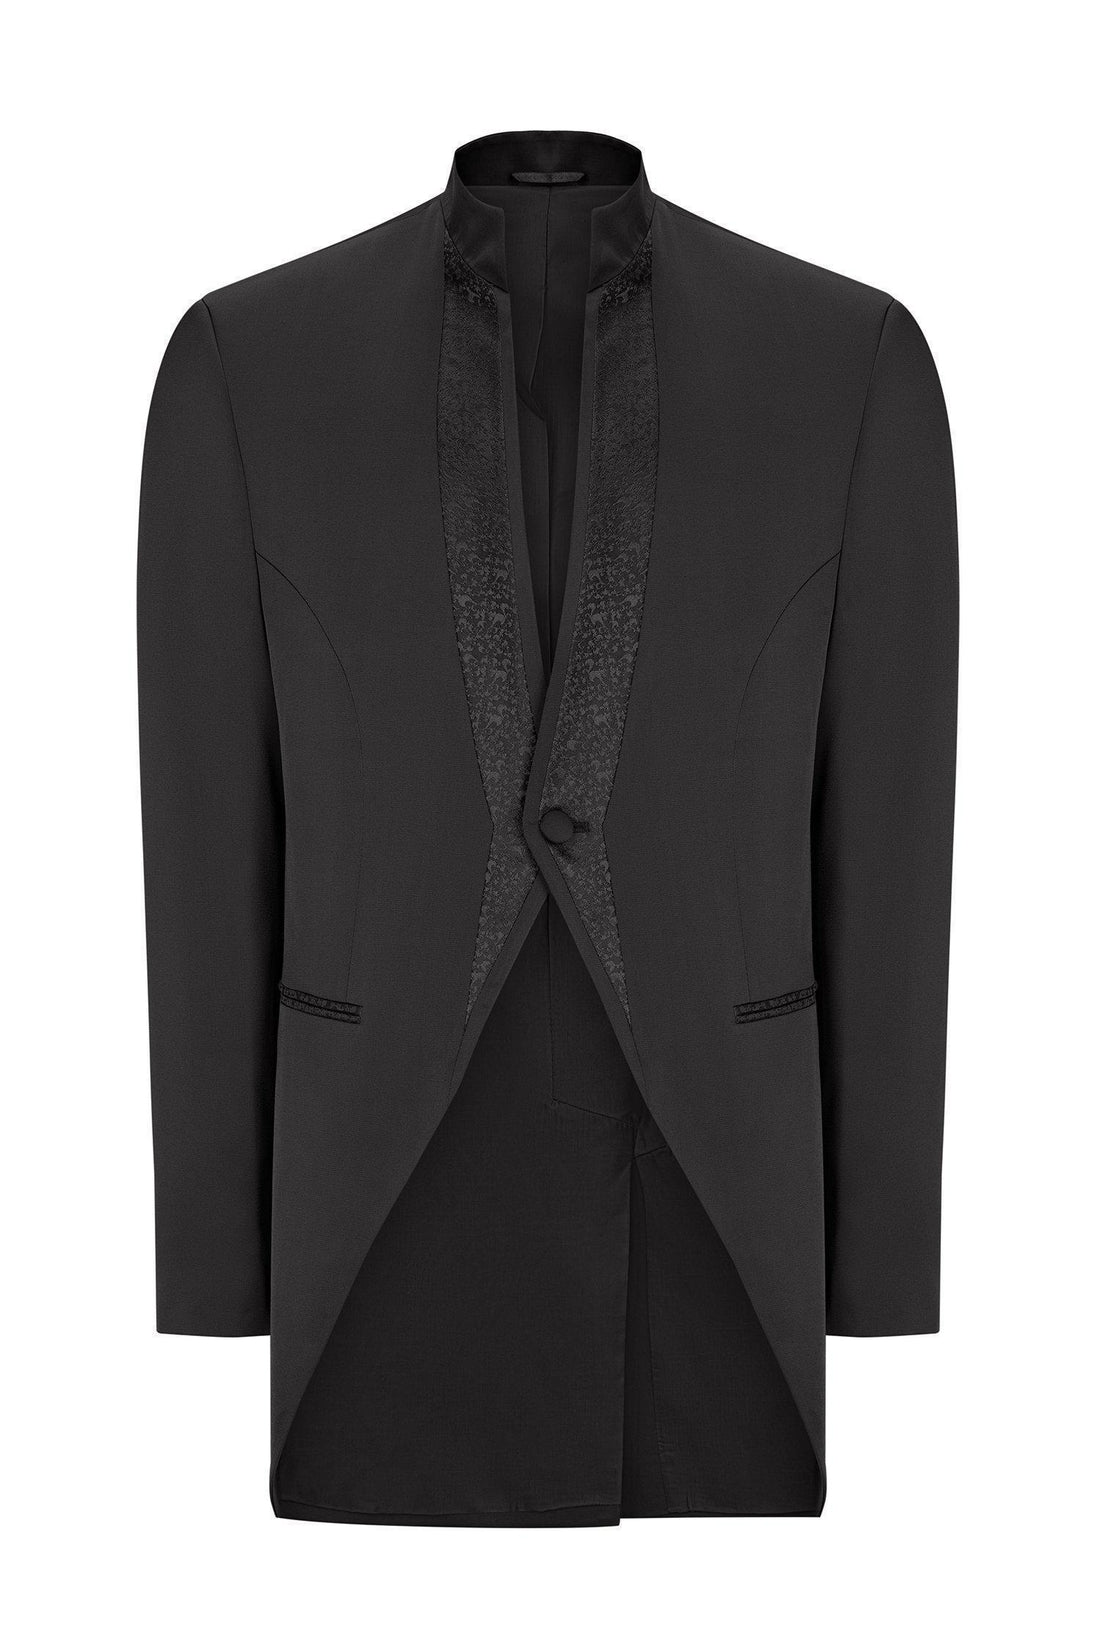 Mao Collar Fitted Trim Tuxedo - Black - Ron Tomson